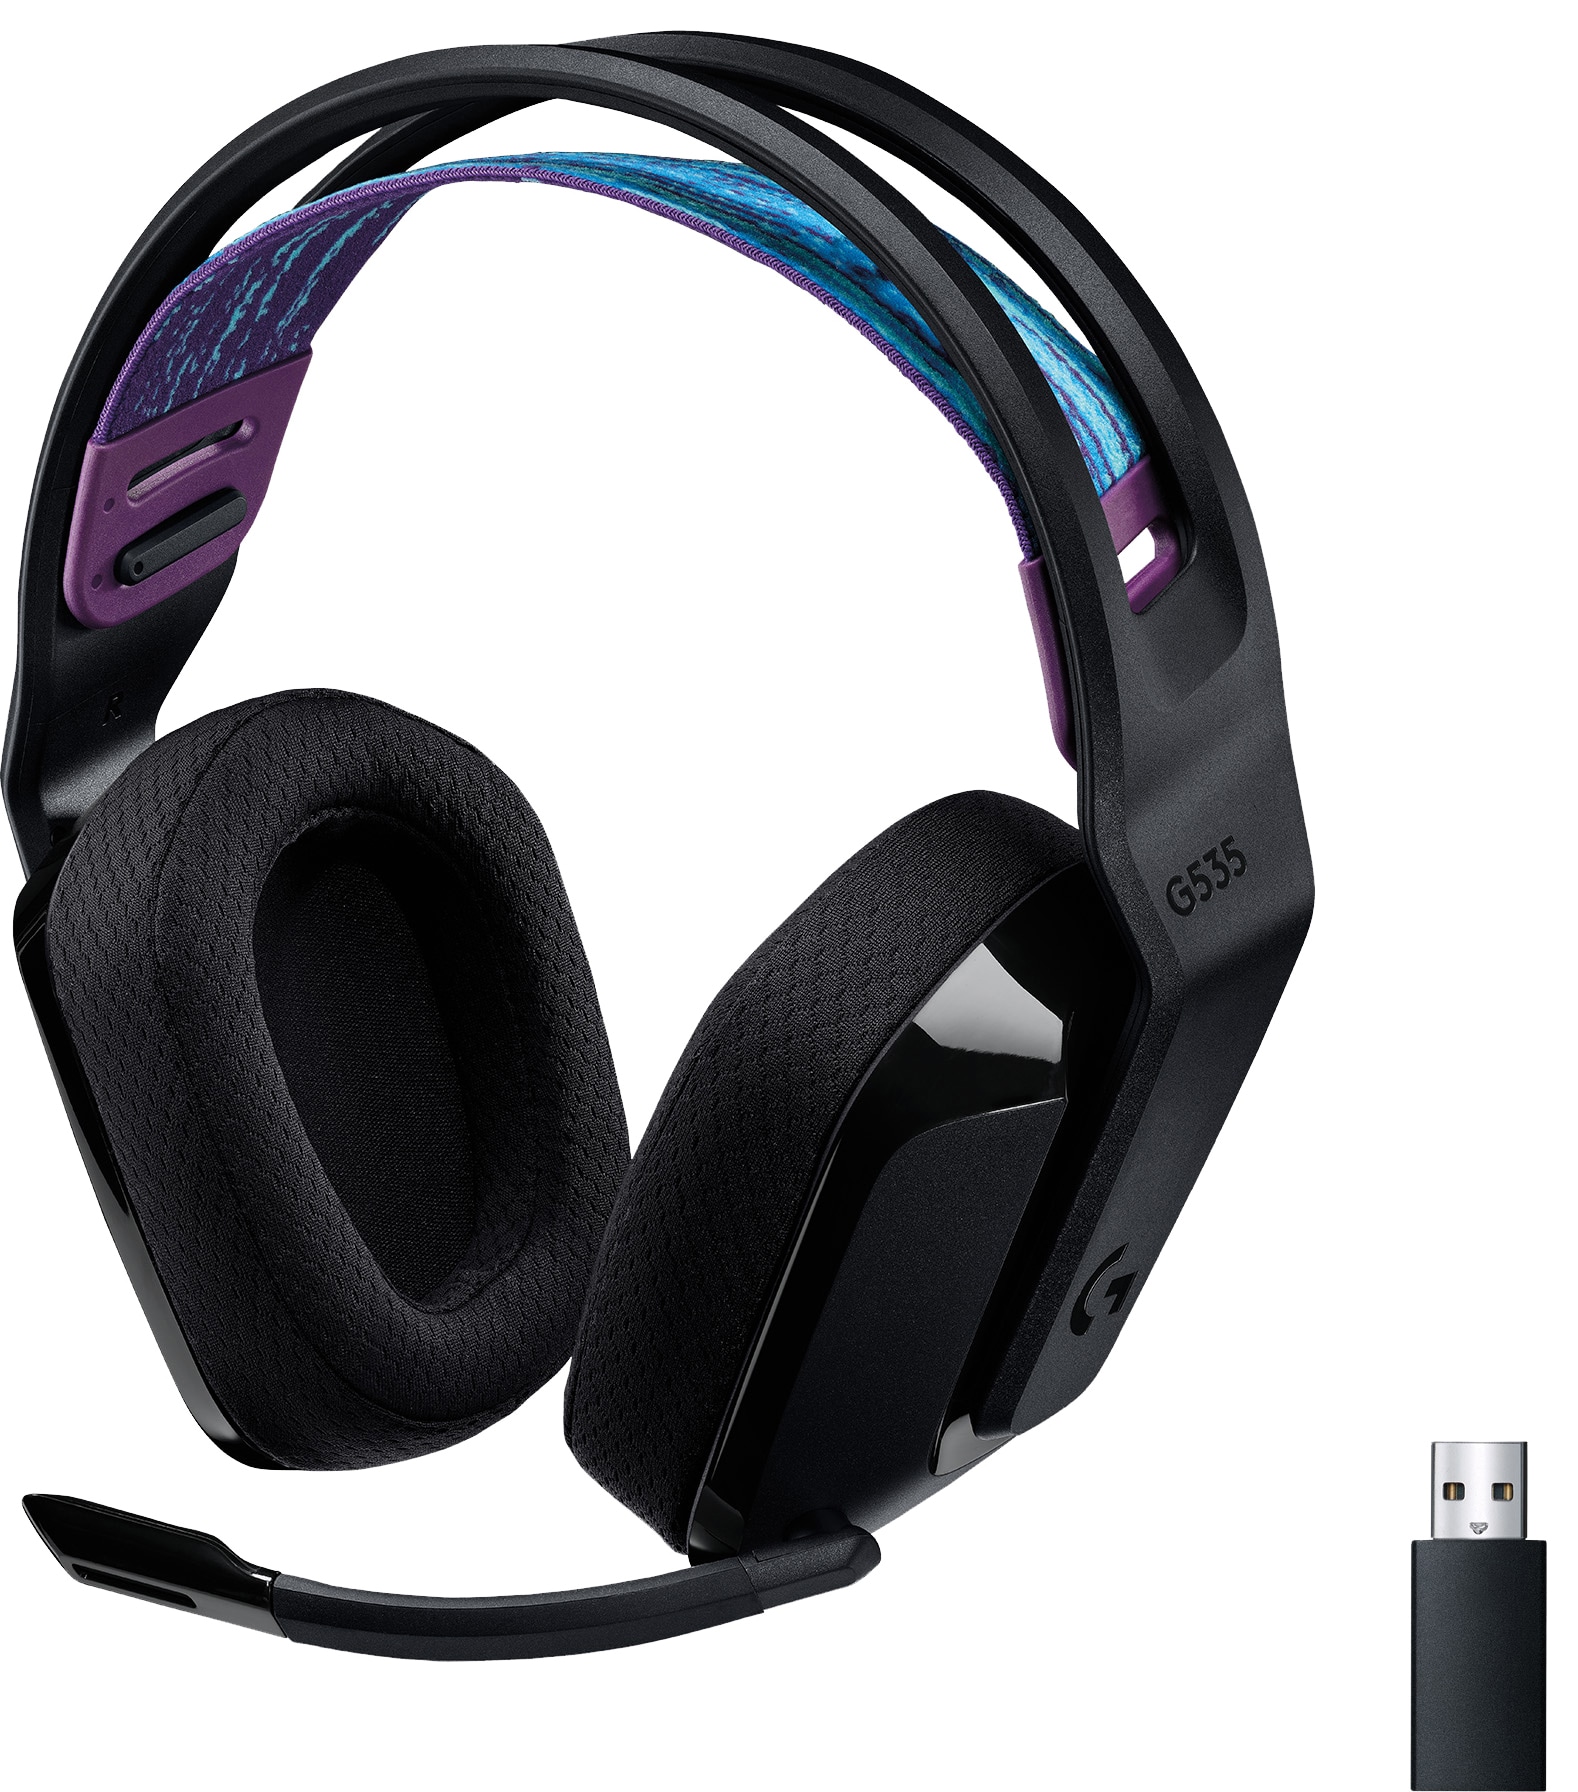 Logitech G535 trådløst gaming headset | Elgiganten